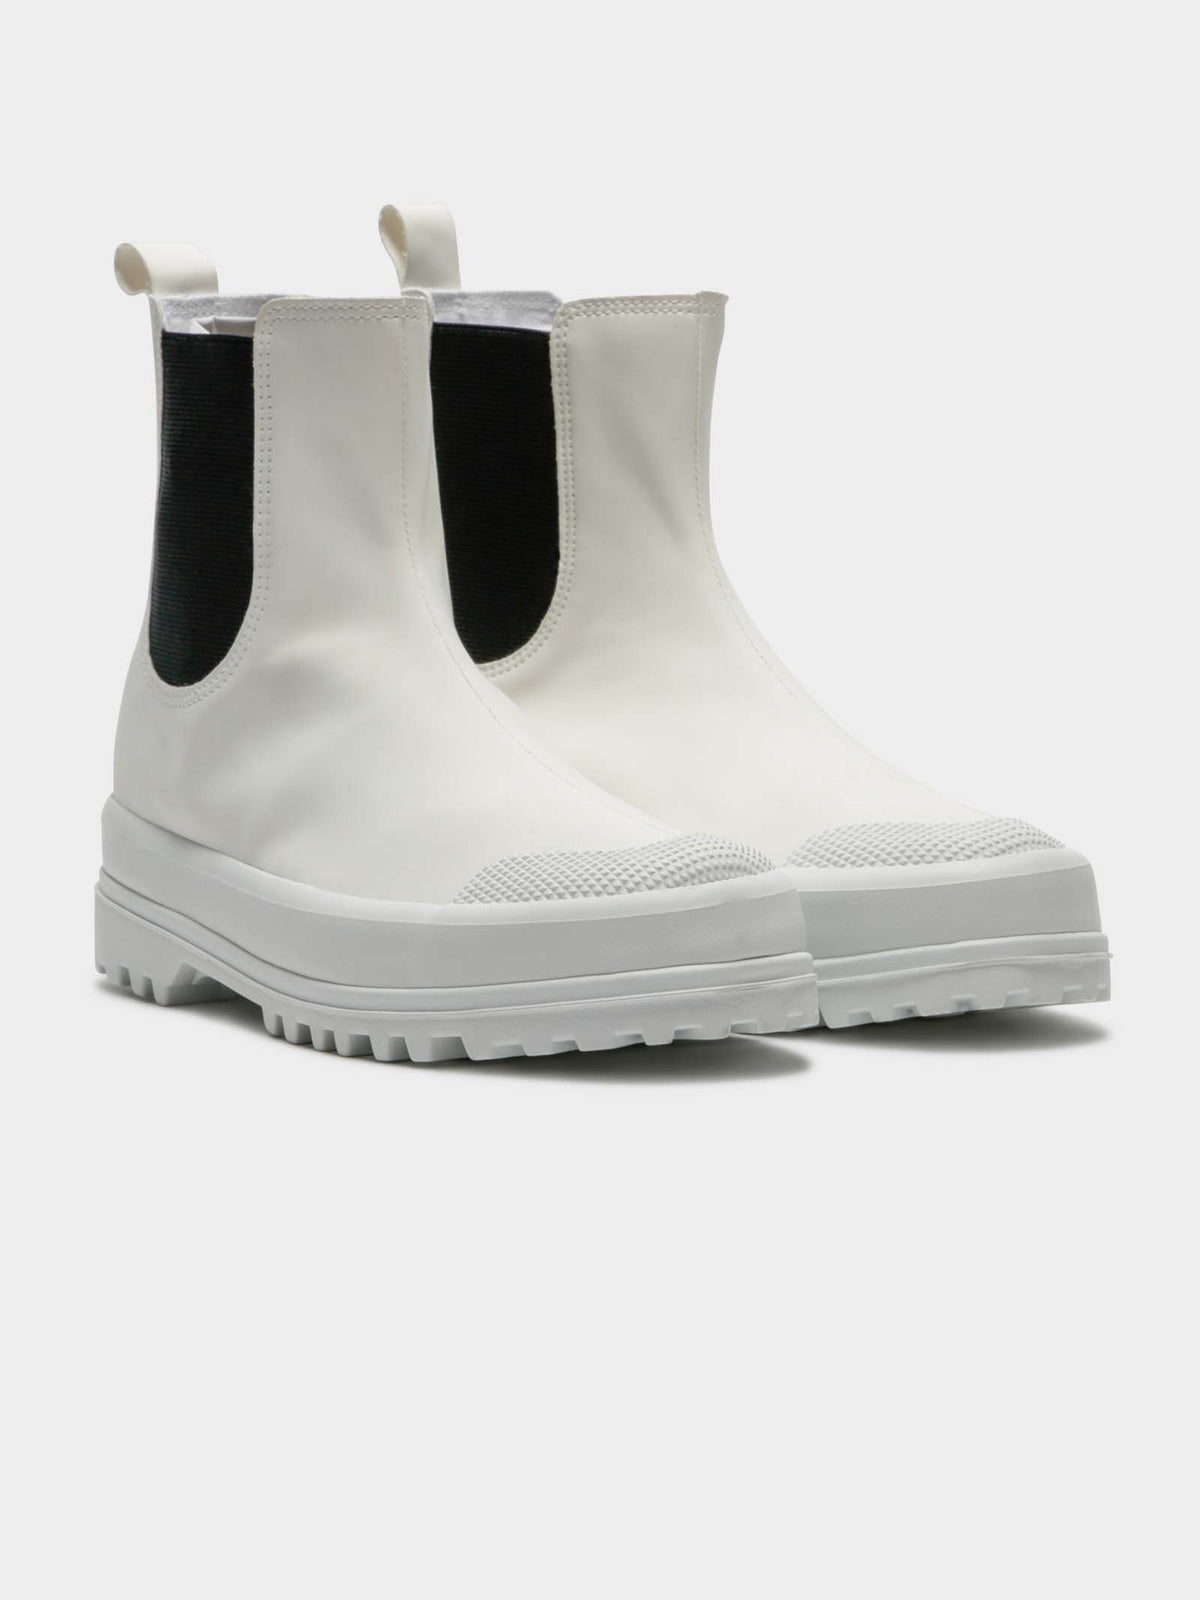 Alexa Chung 2508 Alpina Boots in White